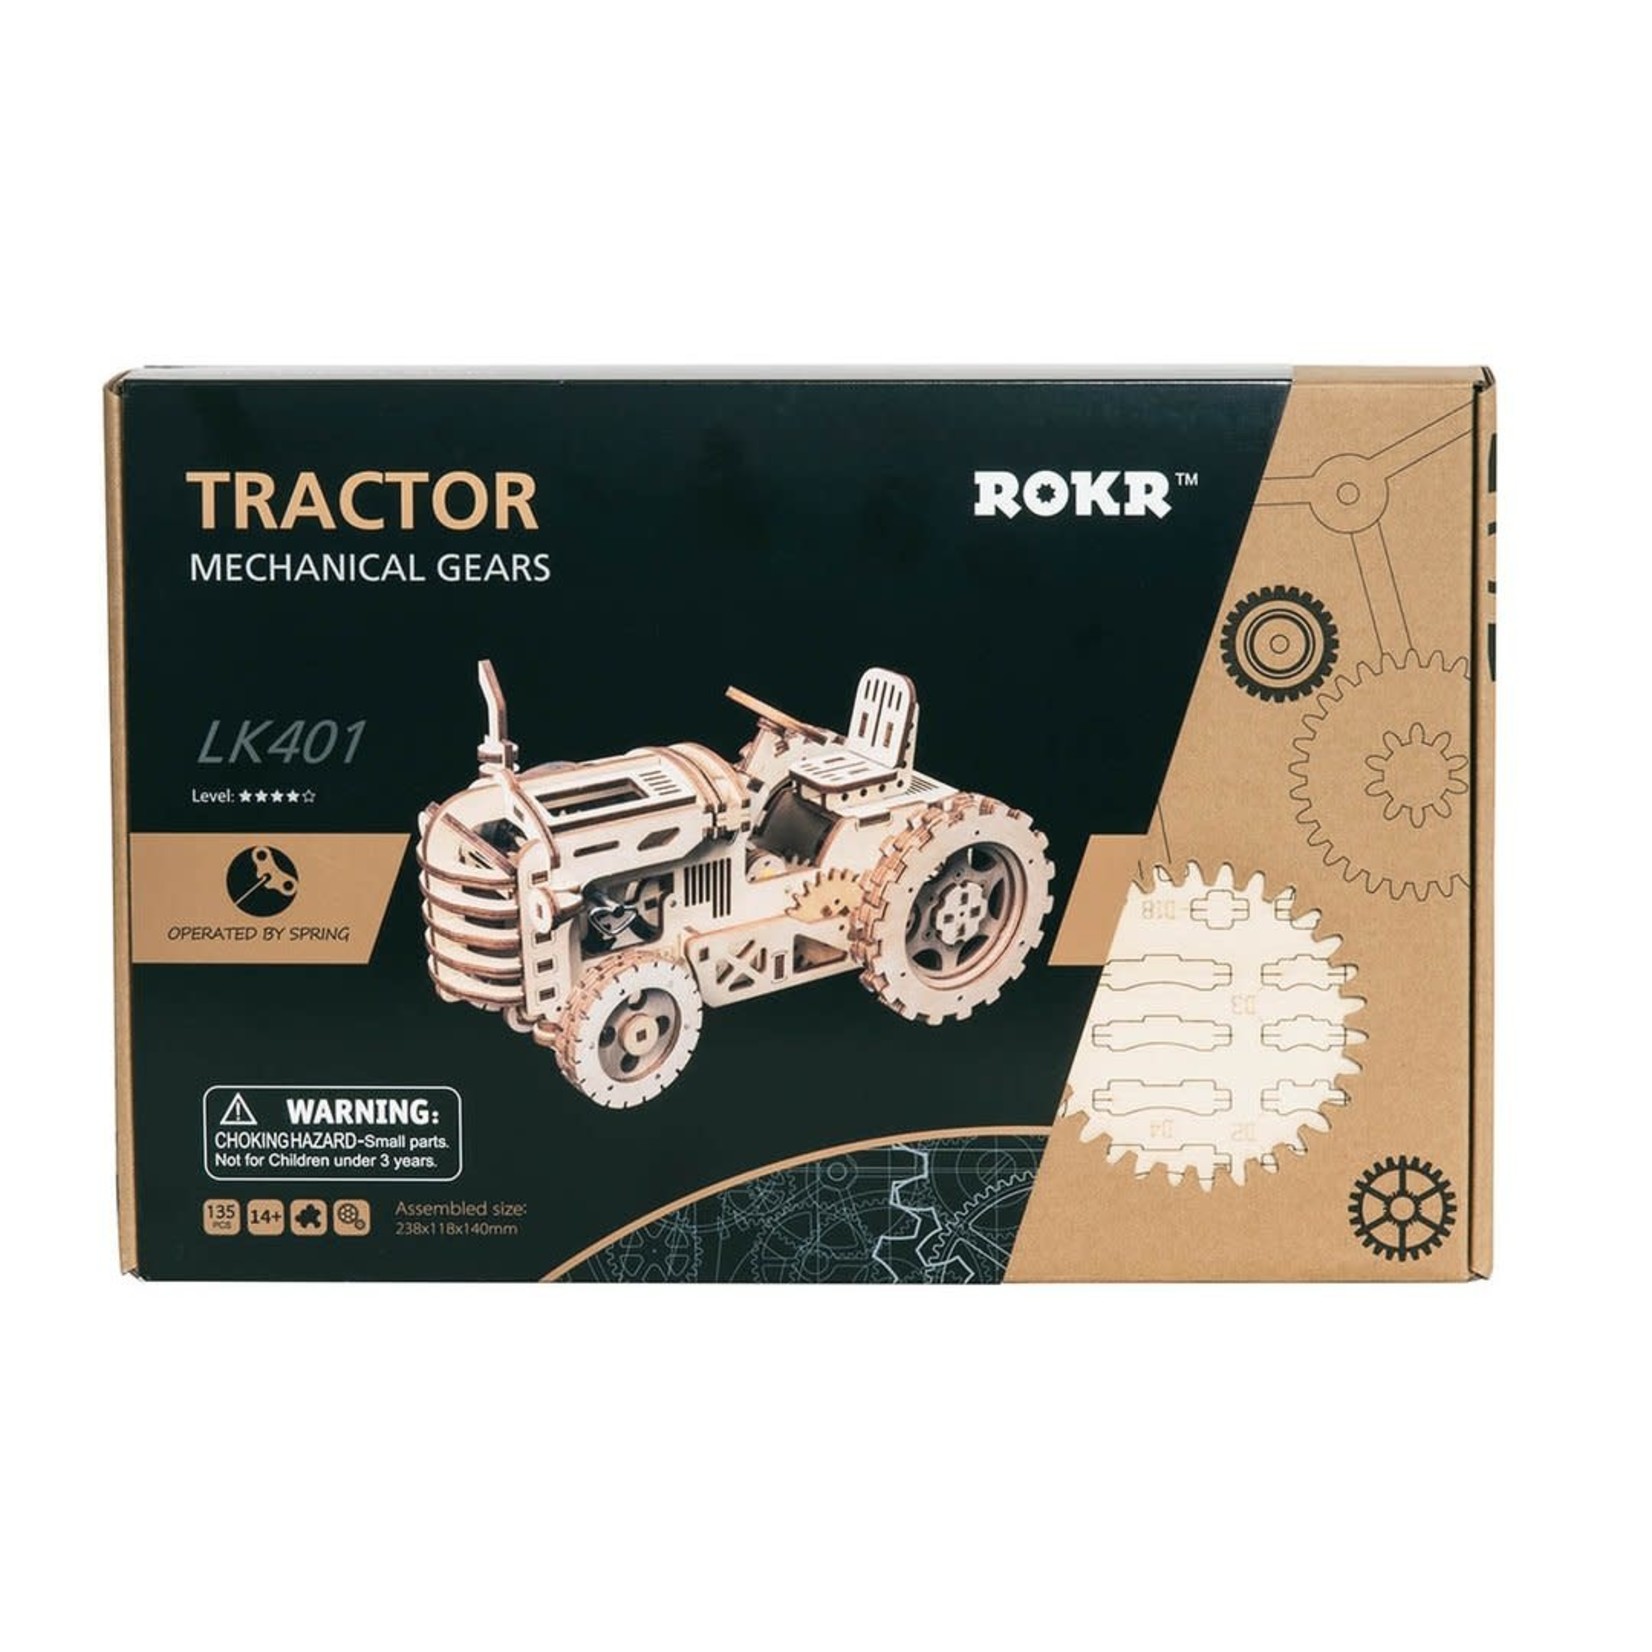 ROKR Mechanical LK401 Tractor